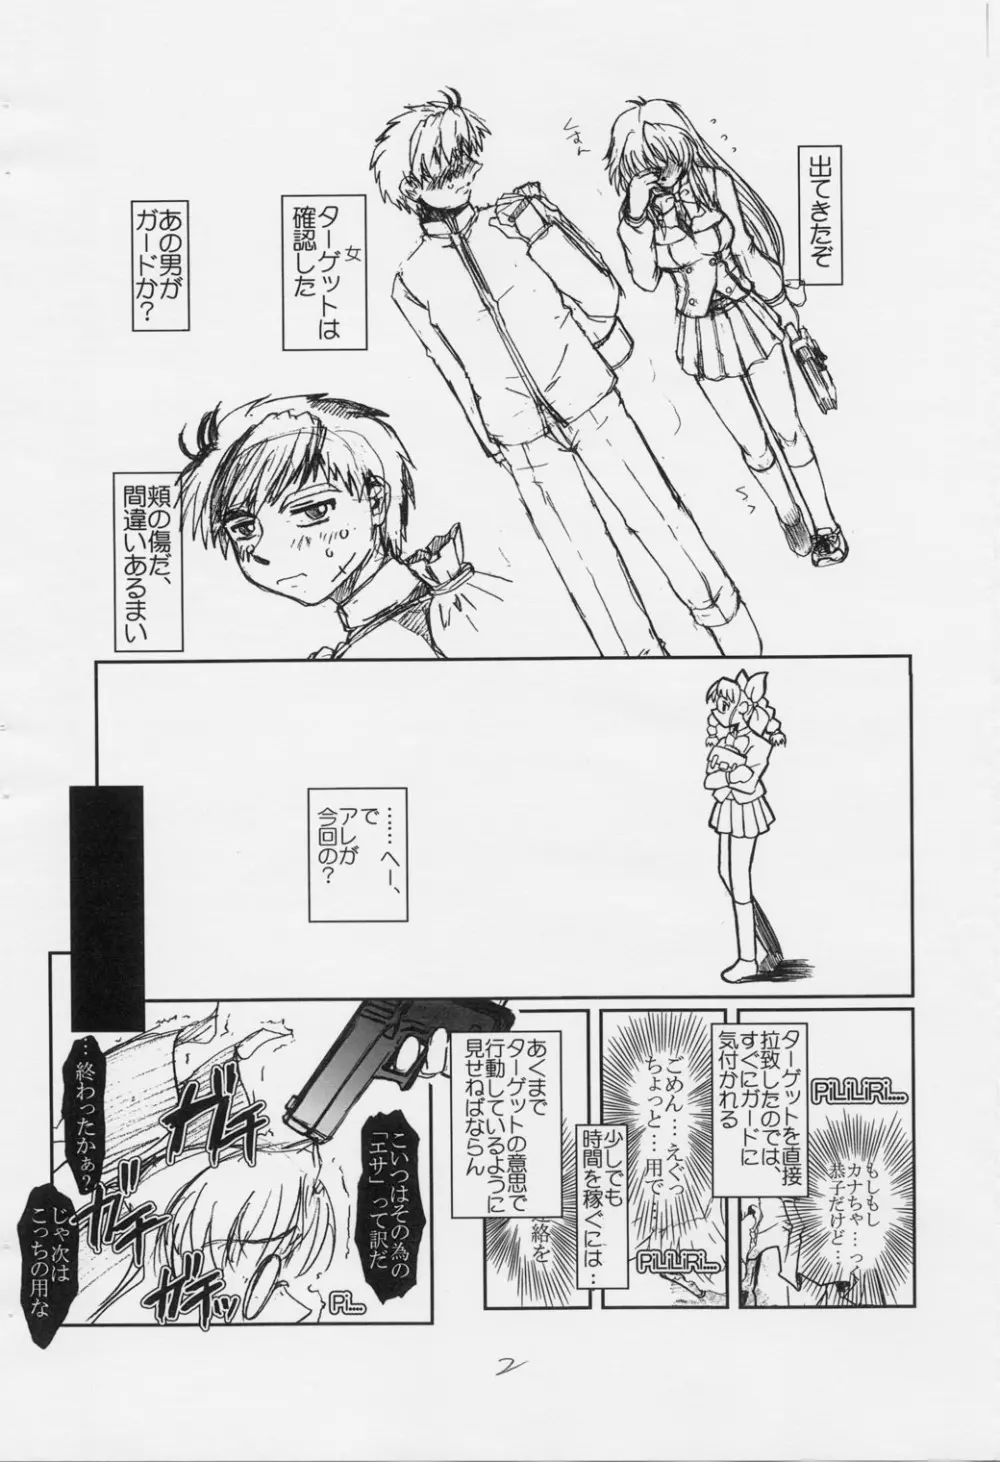 FULLMETAL PANIC! Kyoko - page2